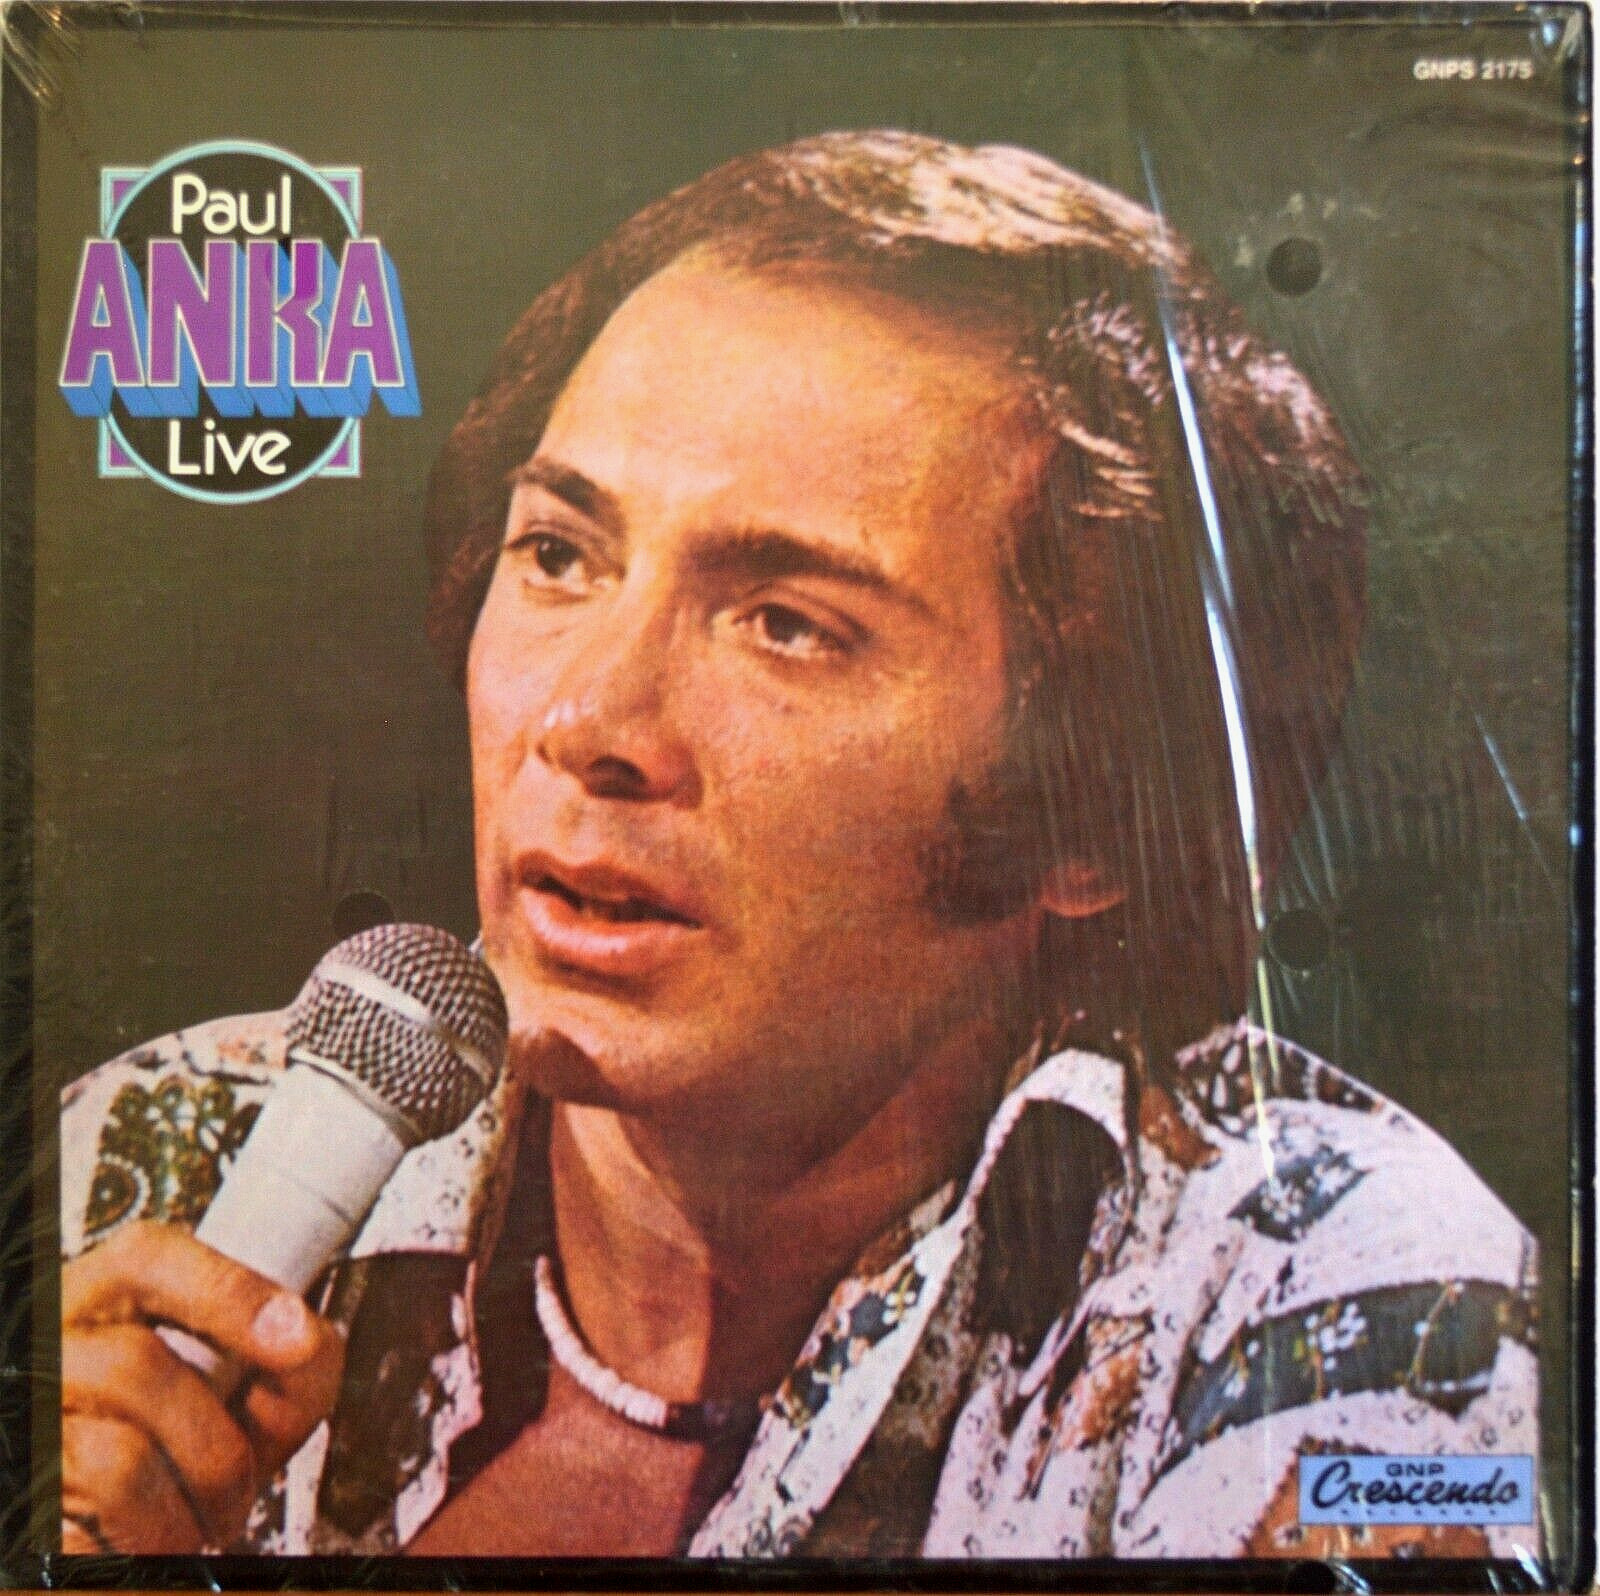 Paul Anka Live Vinyl LP Stereo Record from 1984 GNP Cresceno GNPS 2175 VG+